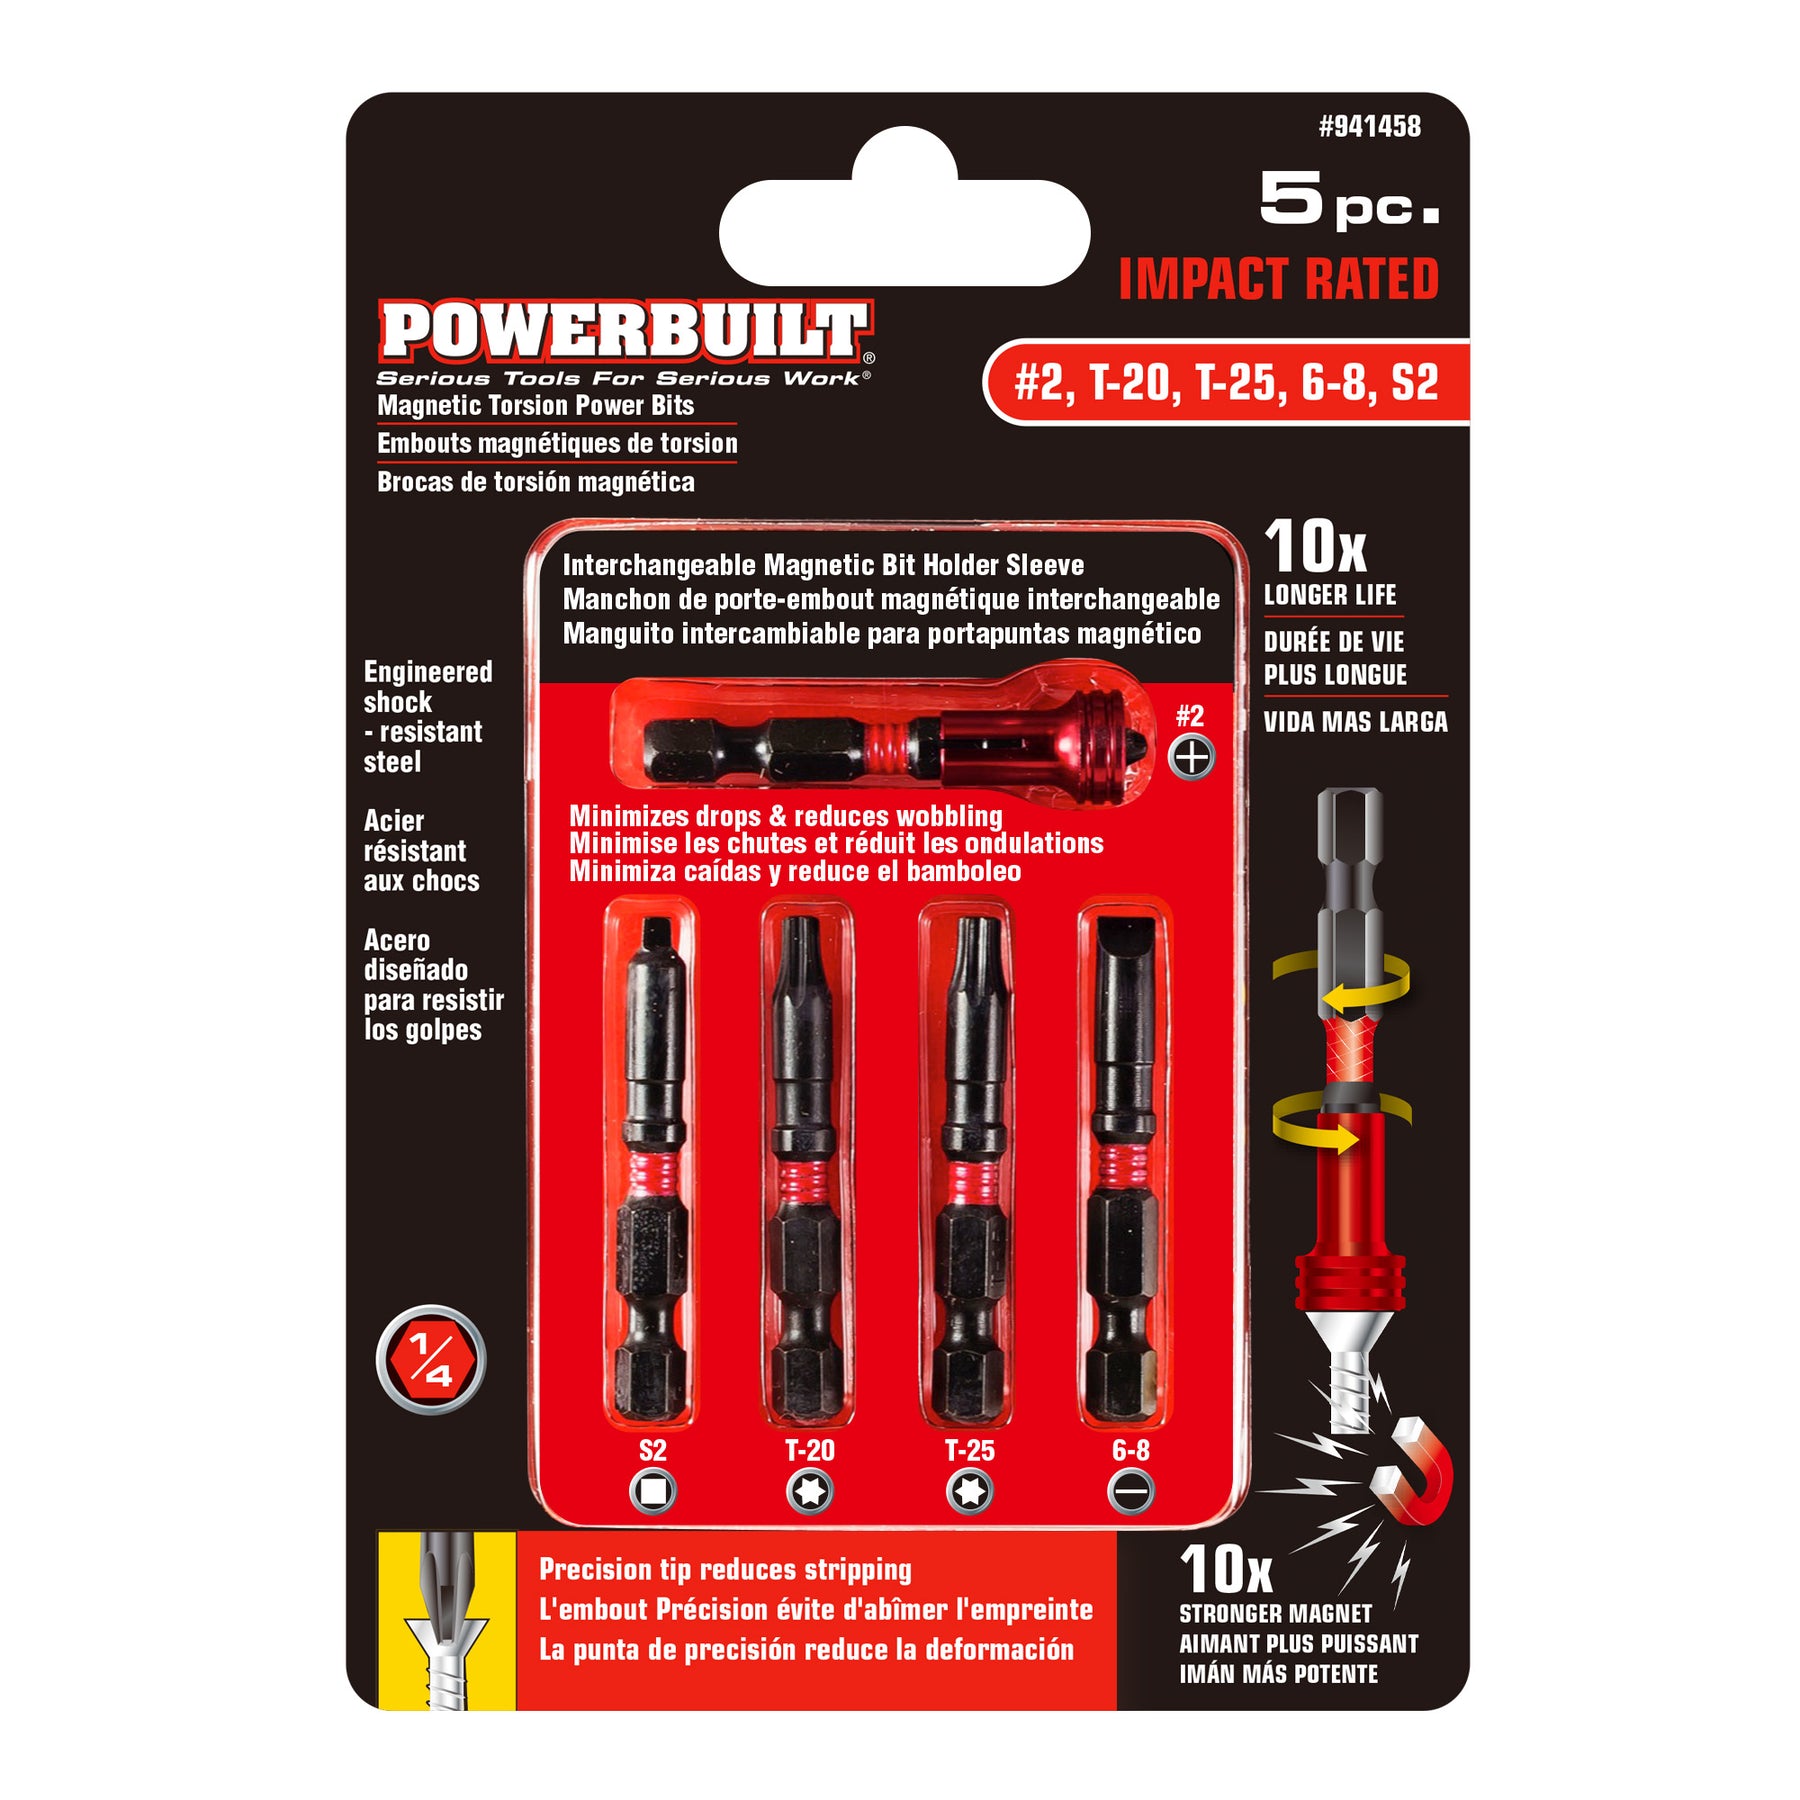 KS Tools 918.3070 Torsionpower Colour Coded Screwdriver Bits, 1/4,  Red/Black, Set of 28 Pieces